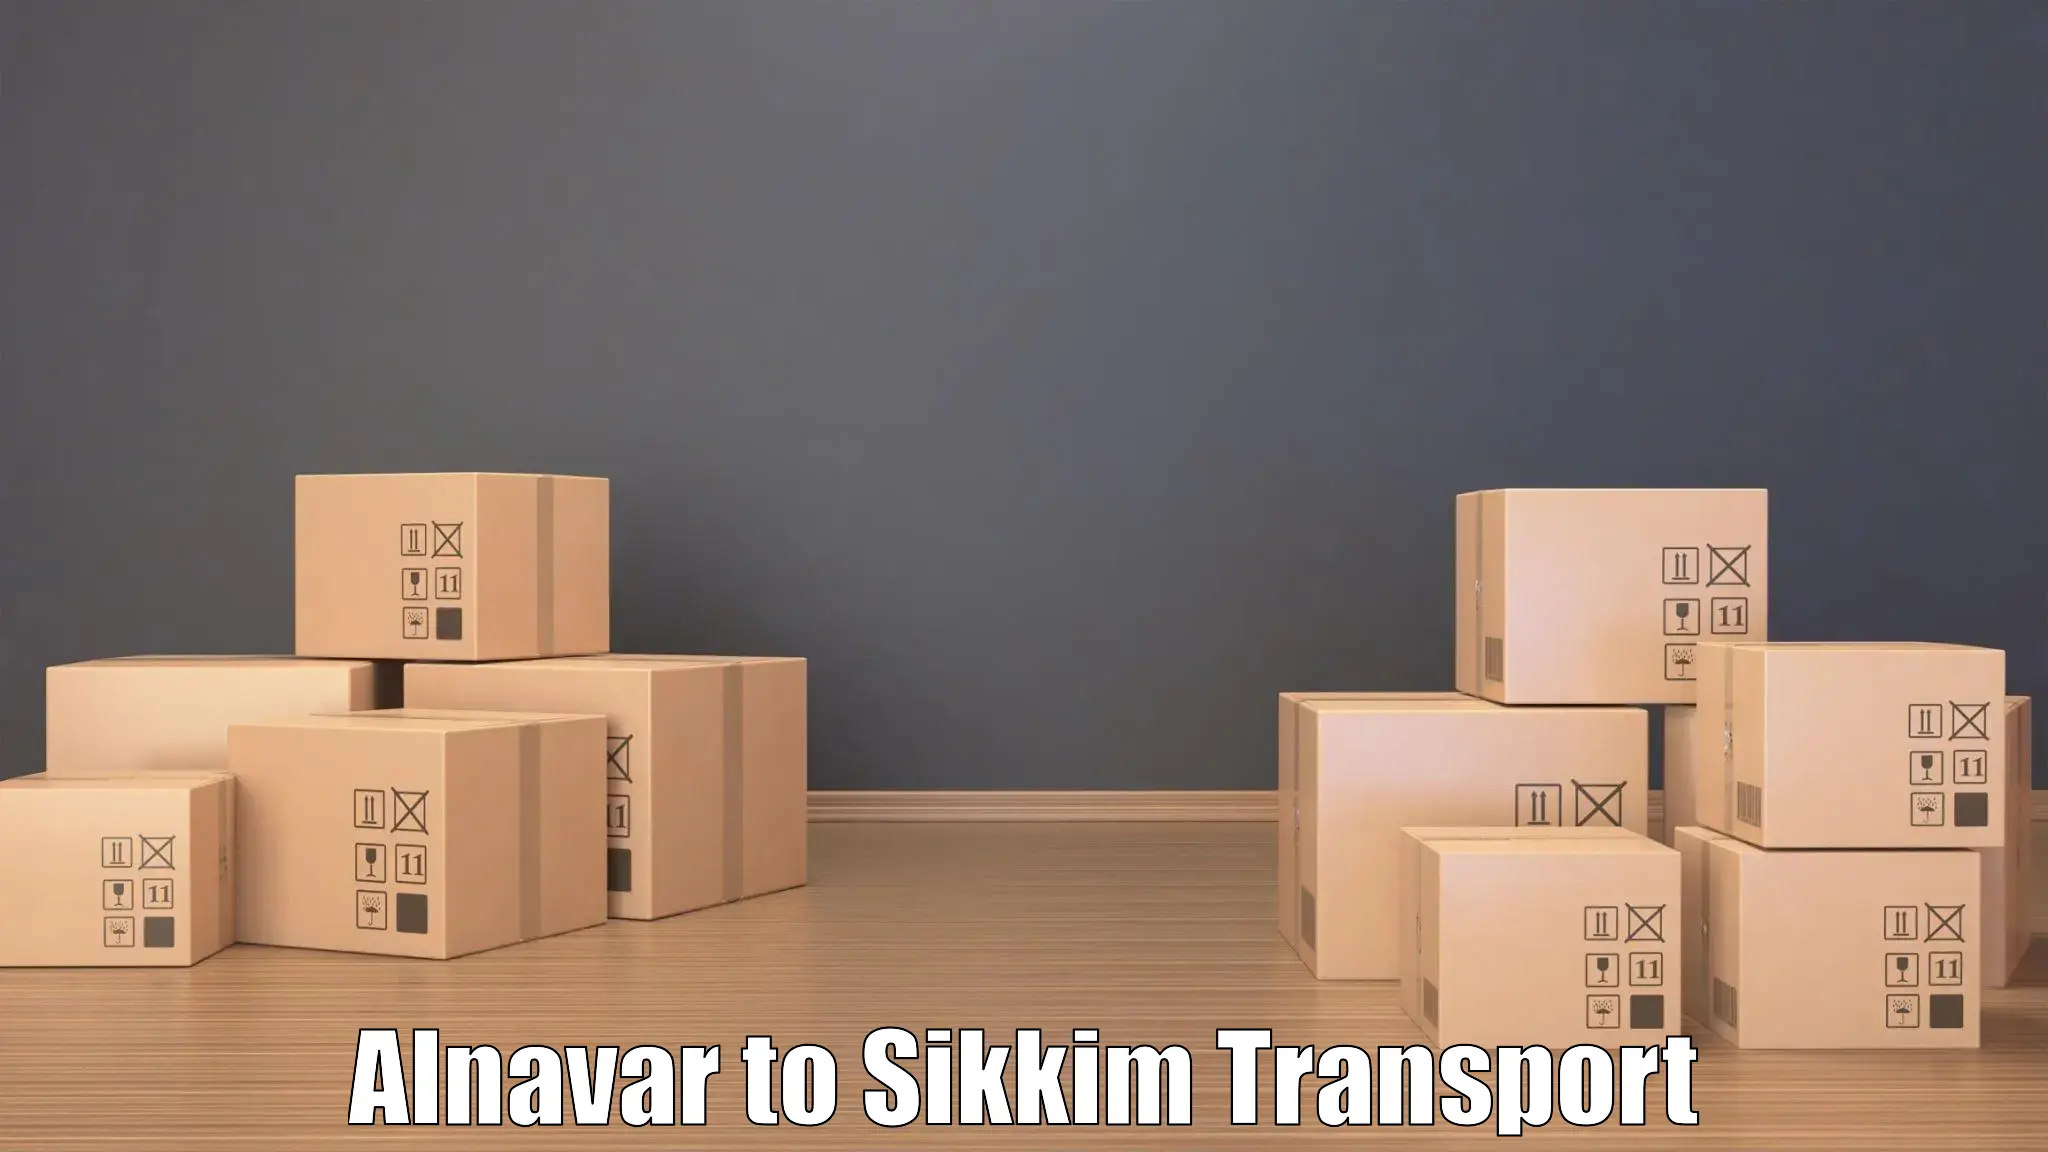 Delivery service Alnavar to Gangtok